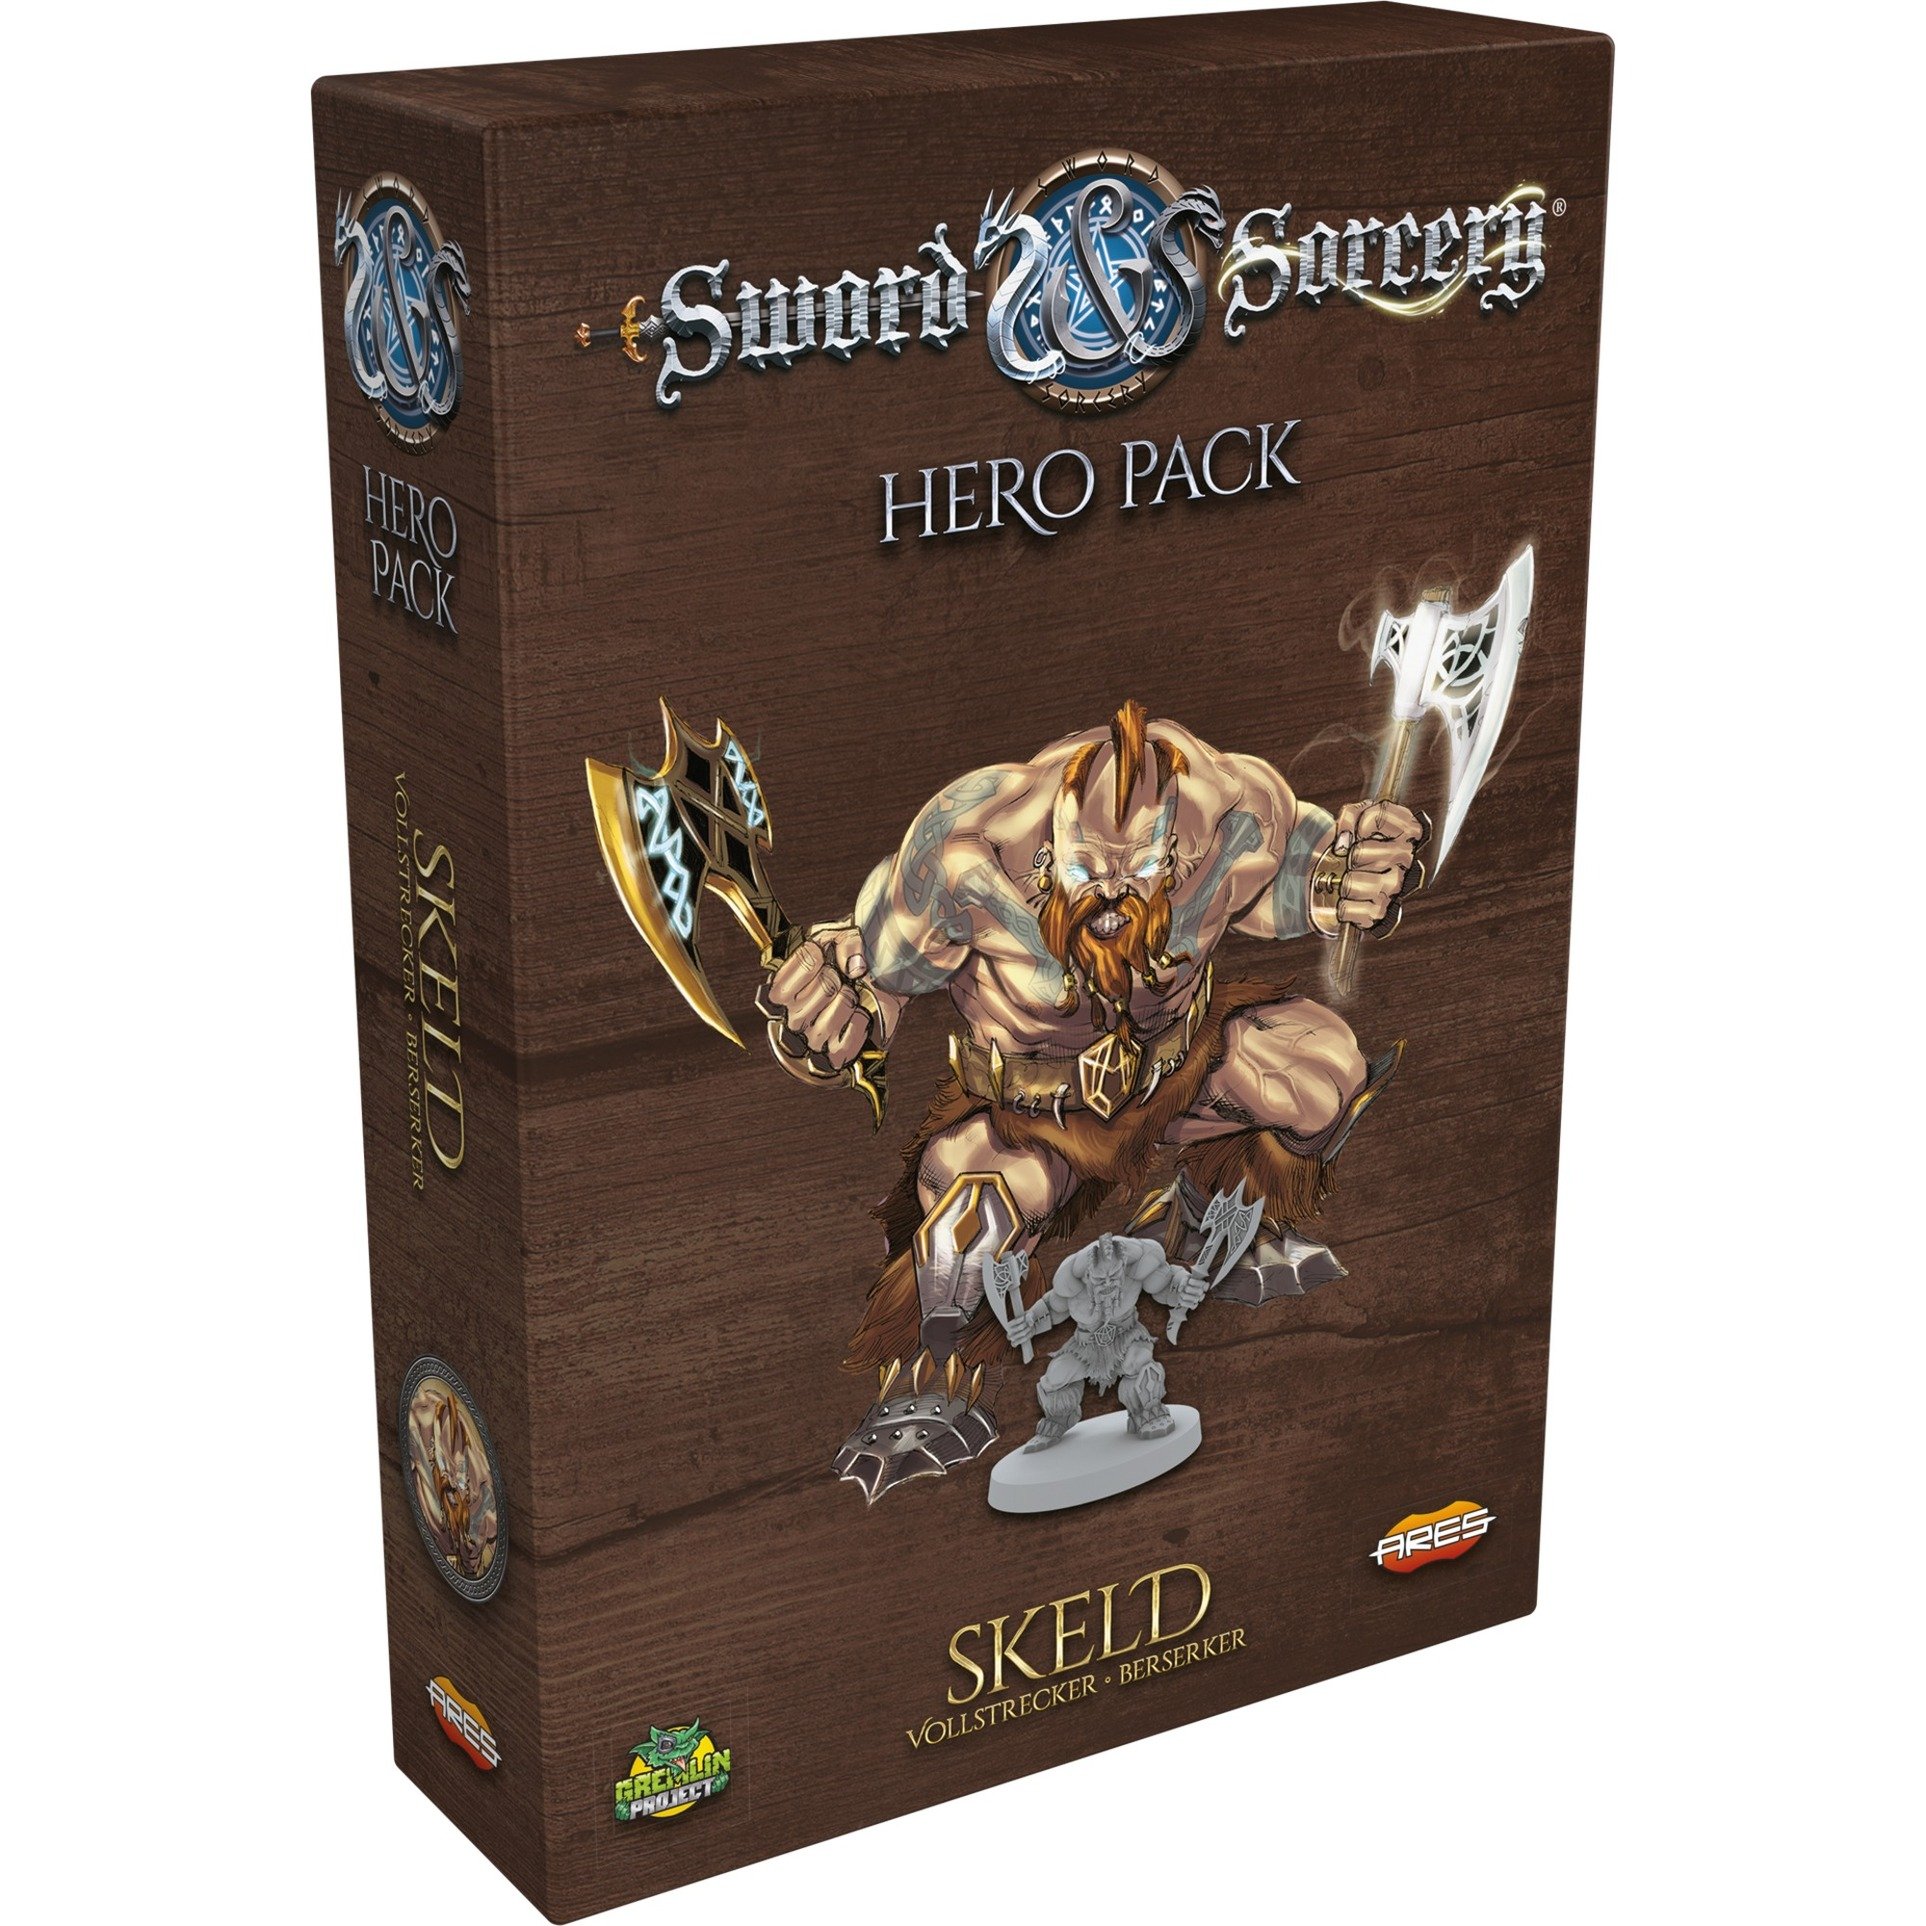 Image of Alternate - Sword & Sorcery - Skeld, Brettspiel online einkaufen bei Alternate